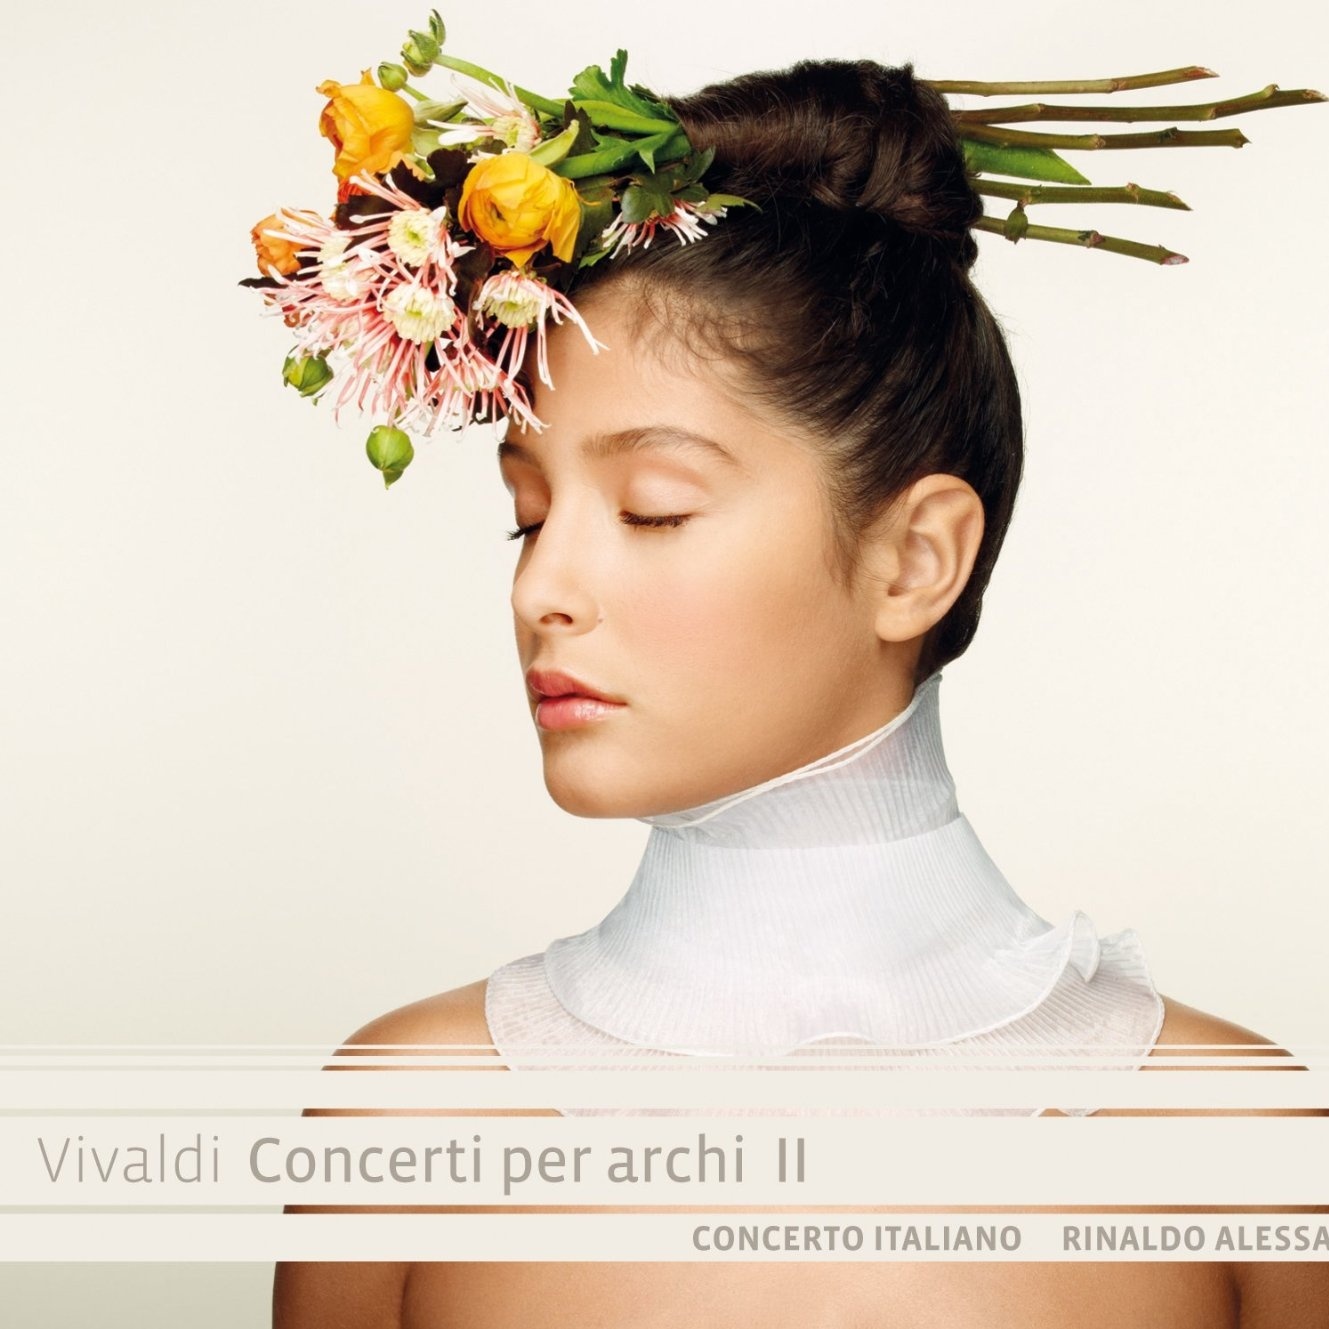 Antonio Vivaldi: Concerto in C Major, RV 110 - III. Allegro